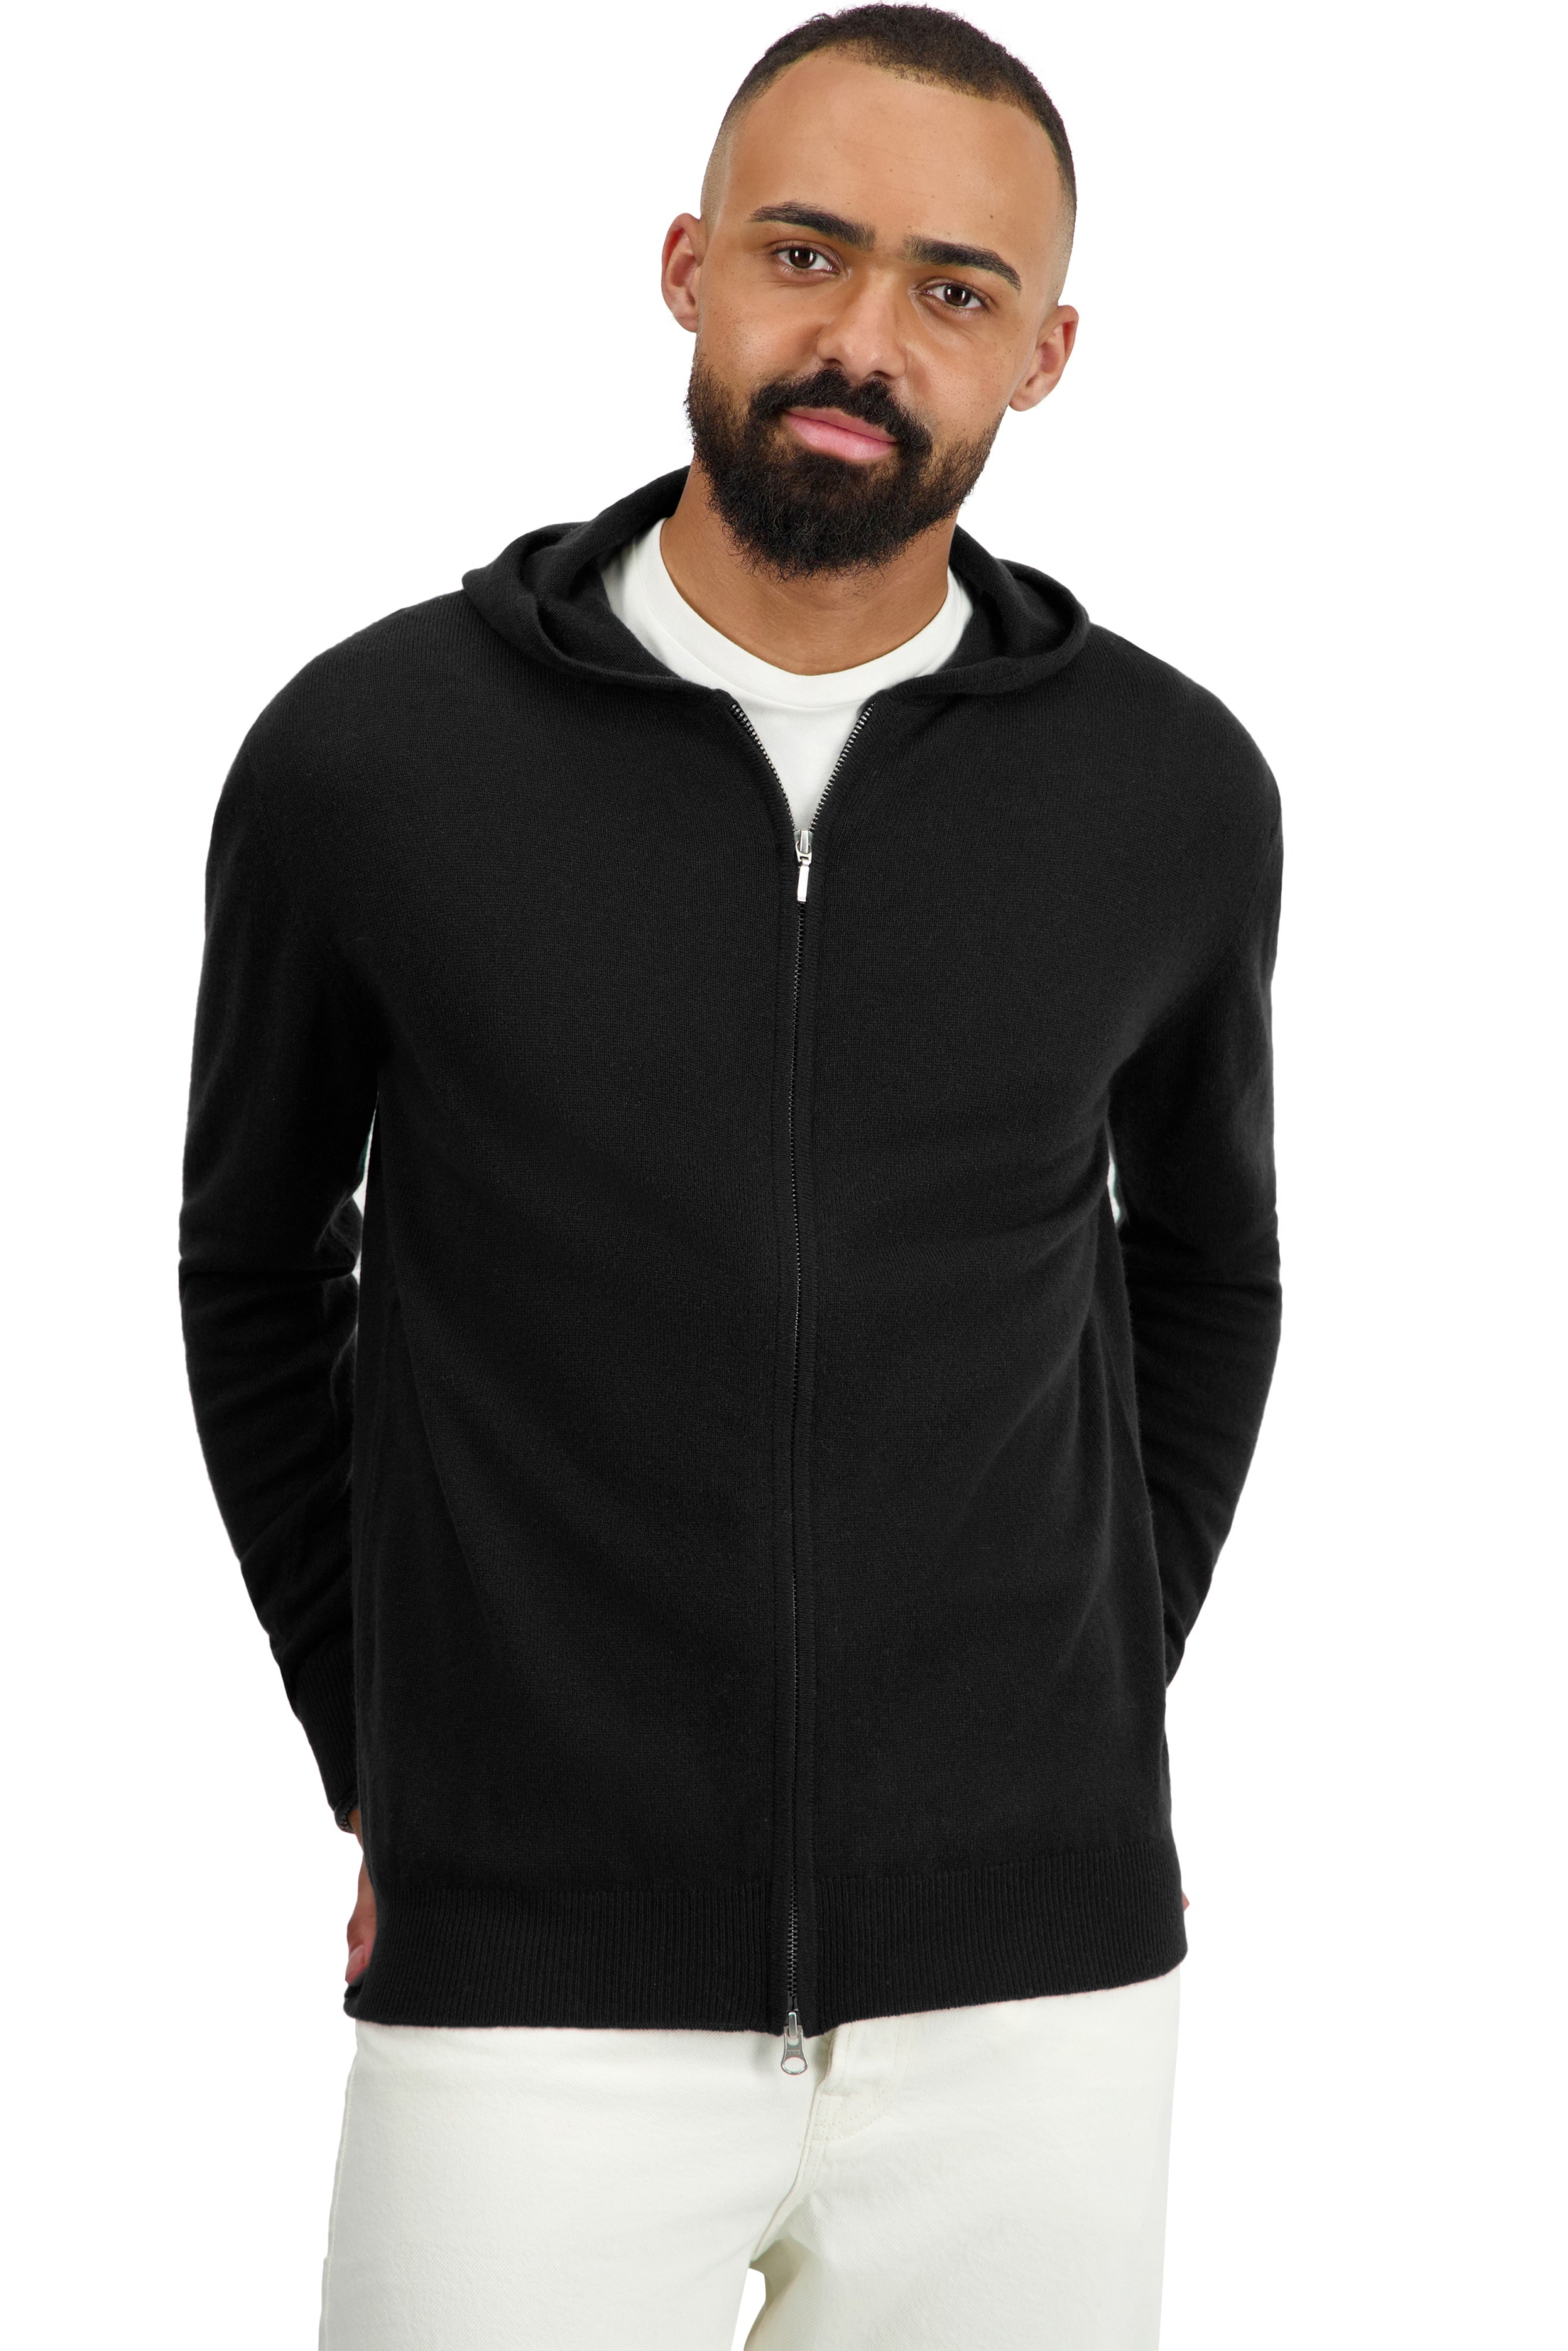 Cashmere men waistcoat sleeveless sweaters taboo first black 2xl